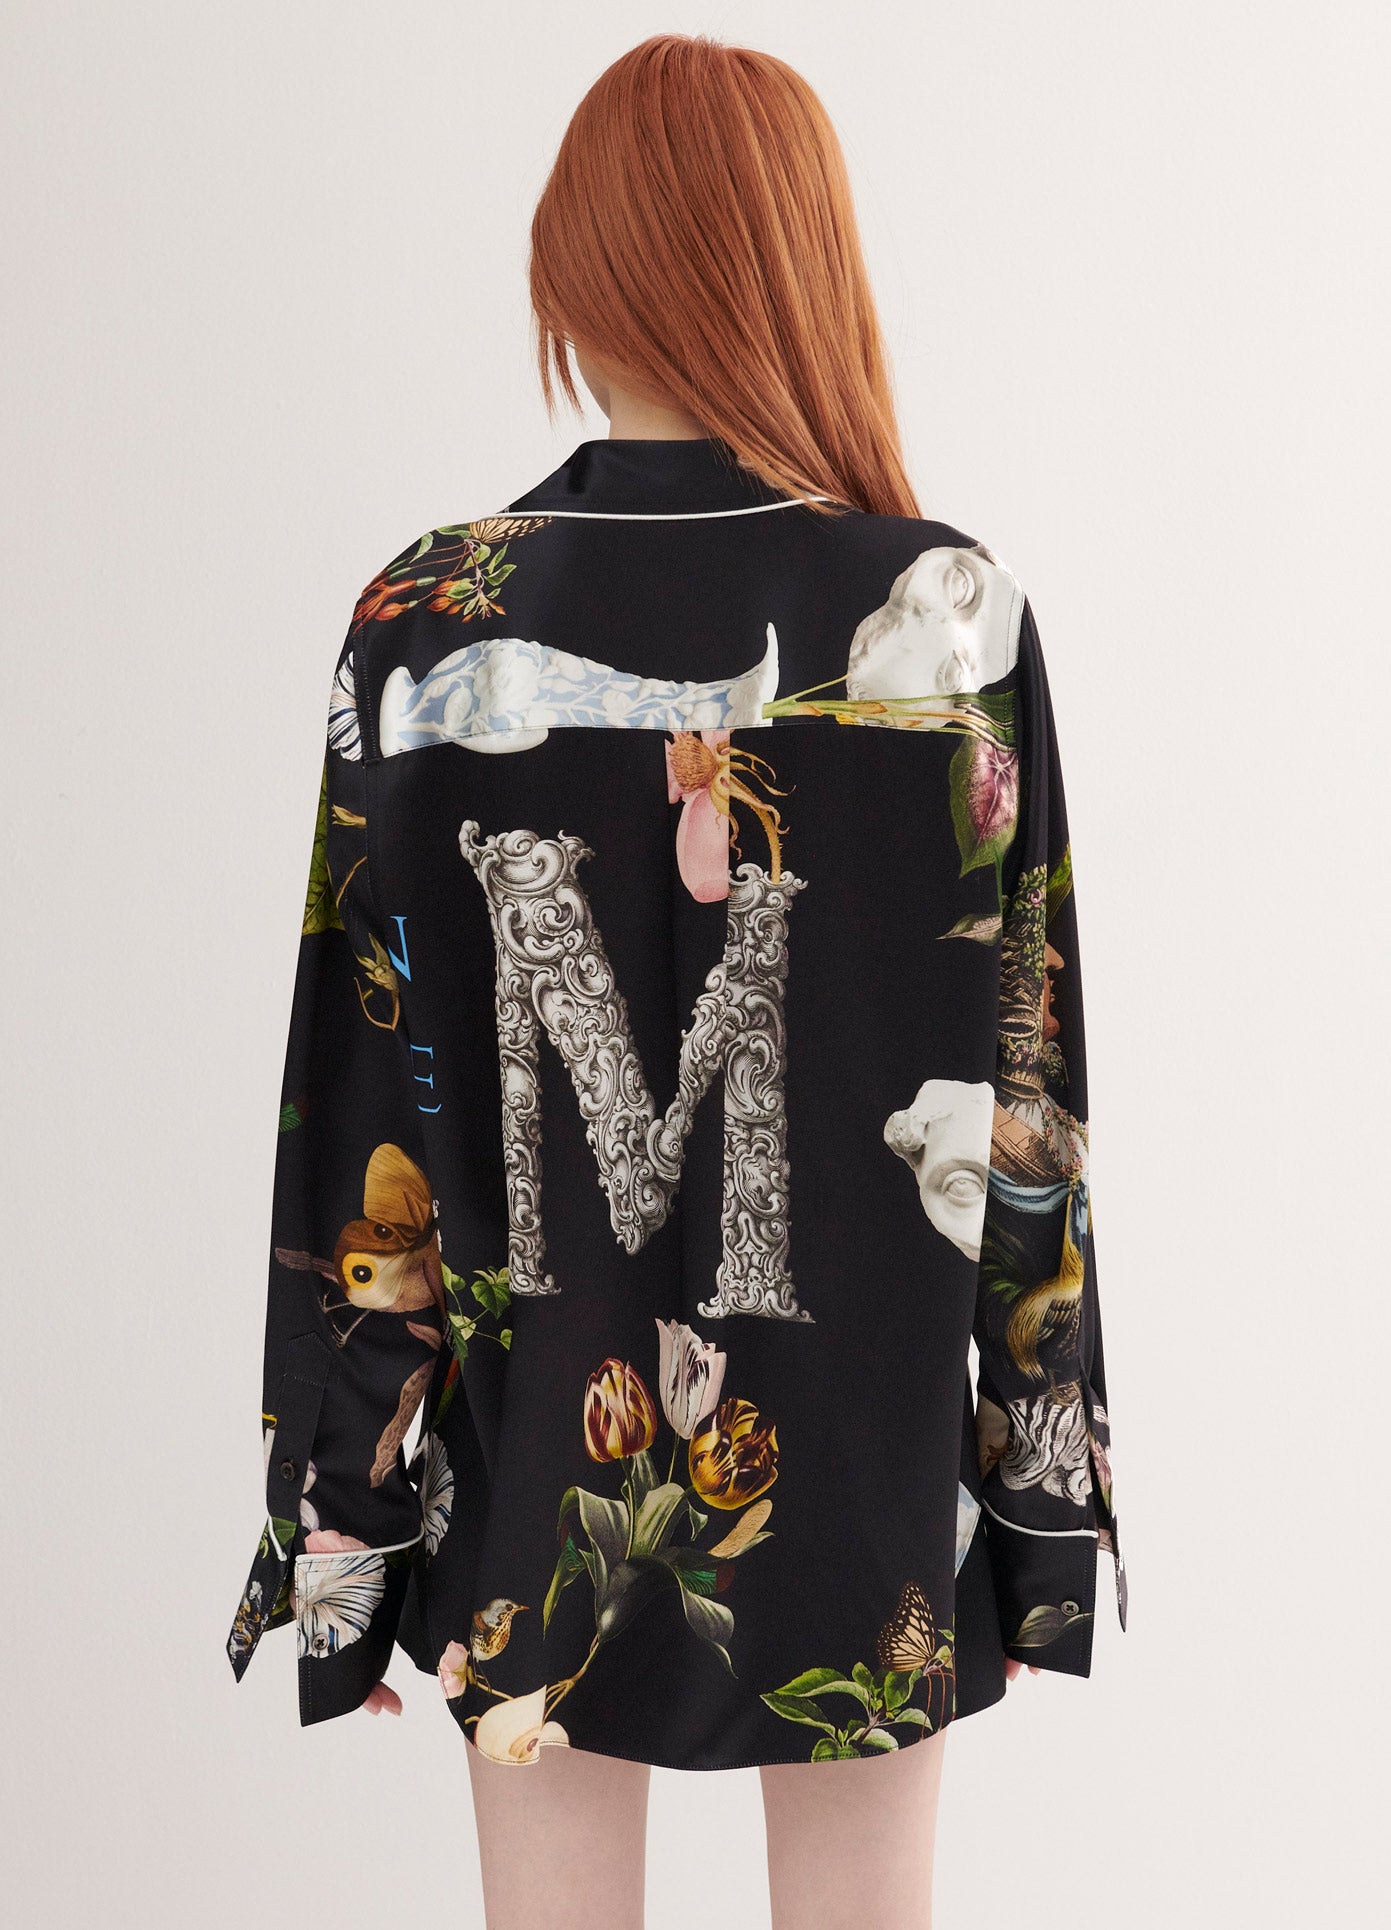 MONSE Print Pyjama Blouse in Black Print on Model Back View